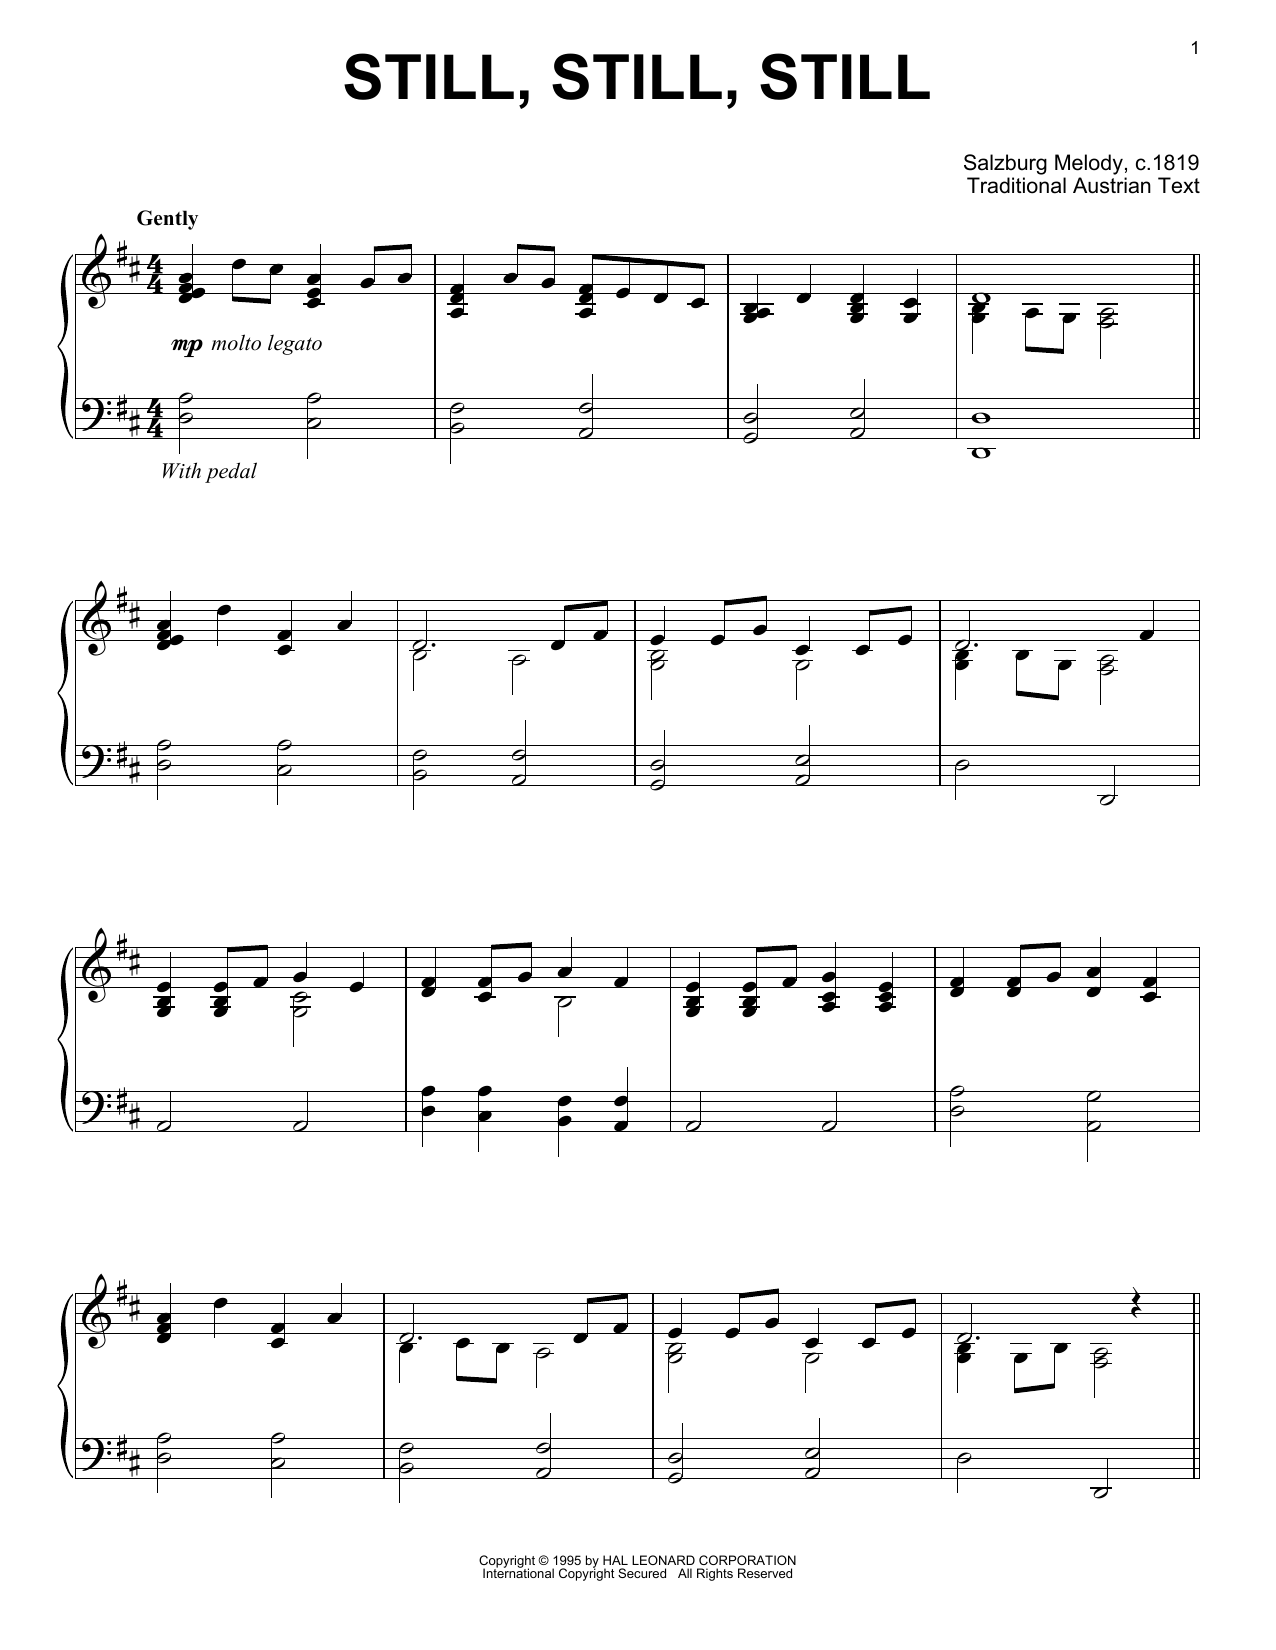 Traditional Austrian Text Still, Still, Still sheet music notes and chords arranged for Super Easy Piano